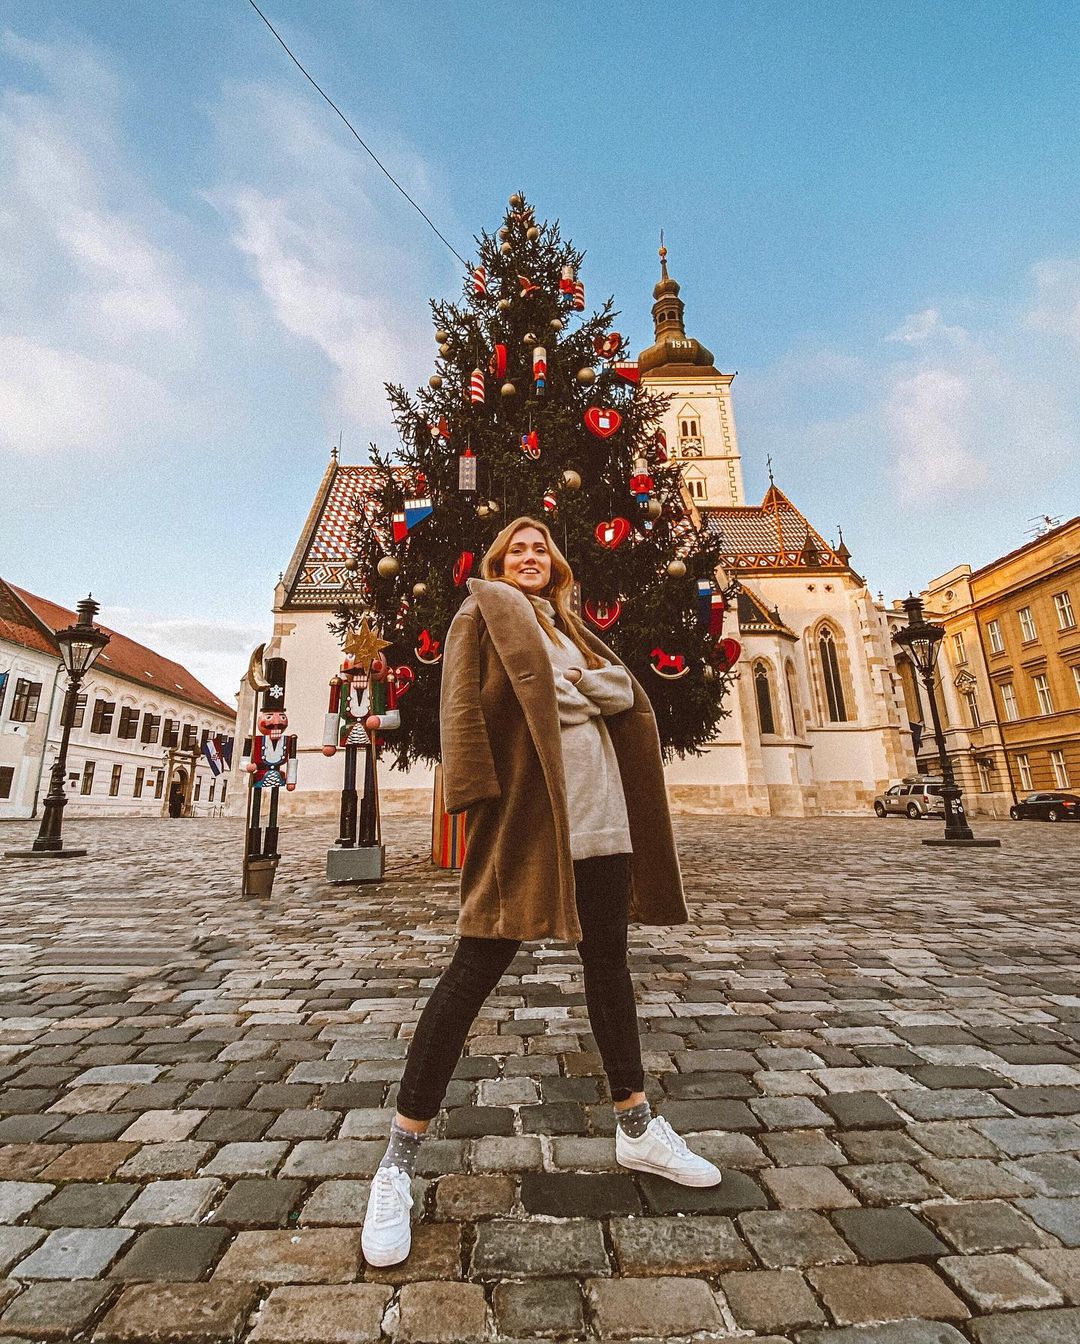 Zagreb Christmas Market - Best Christmas Markets in Europe